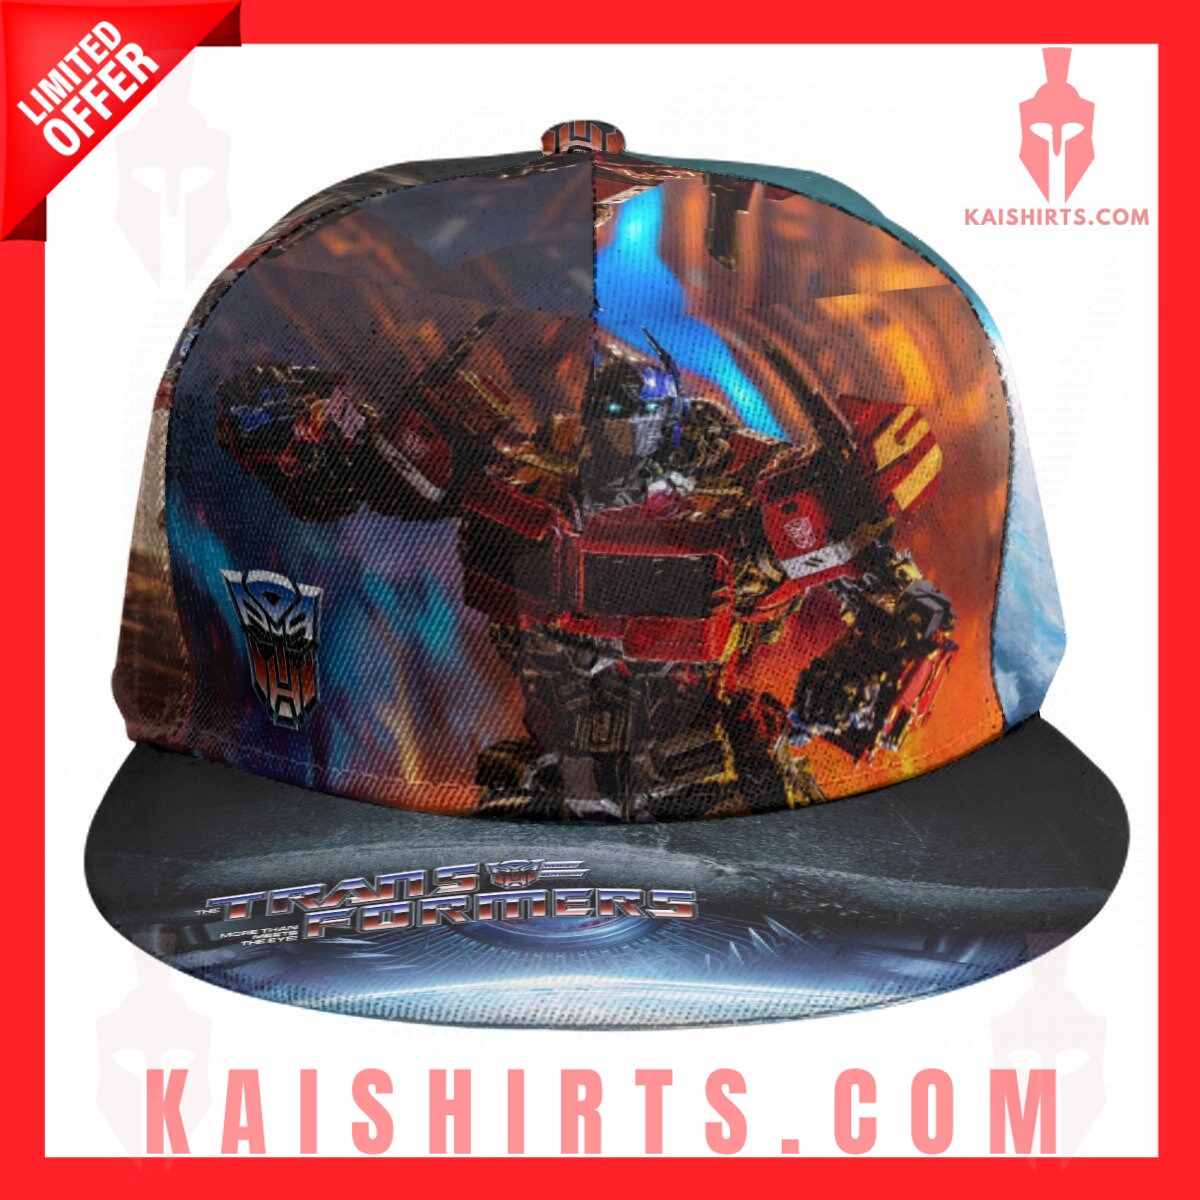 Optimus Prime Baseball Cap's Product Pictures - Kaishirts.com